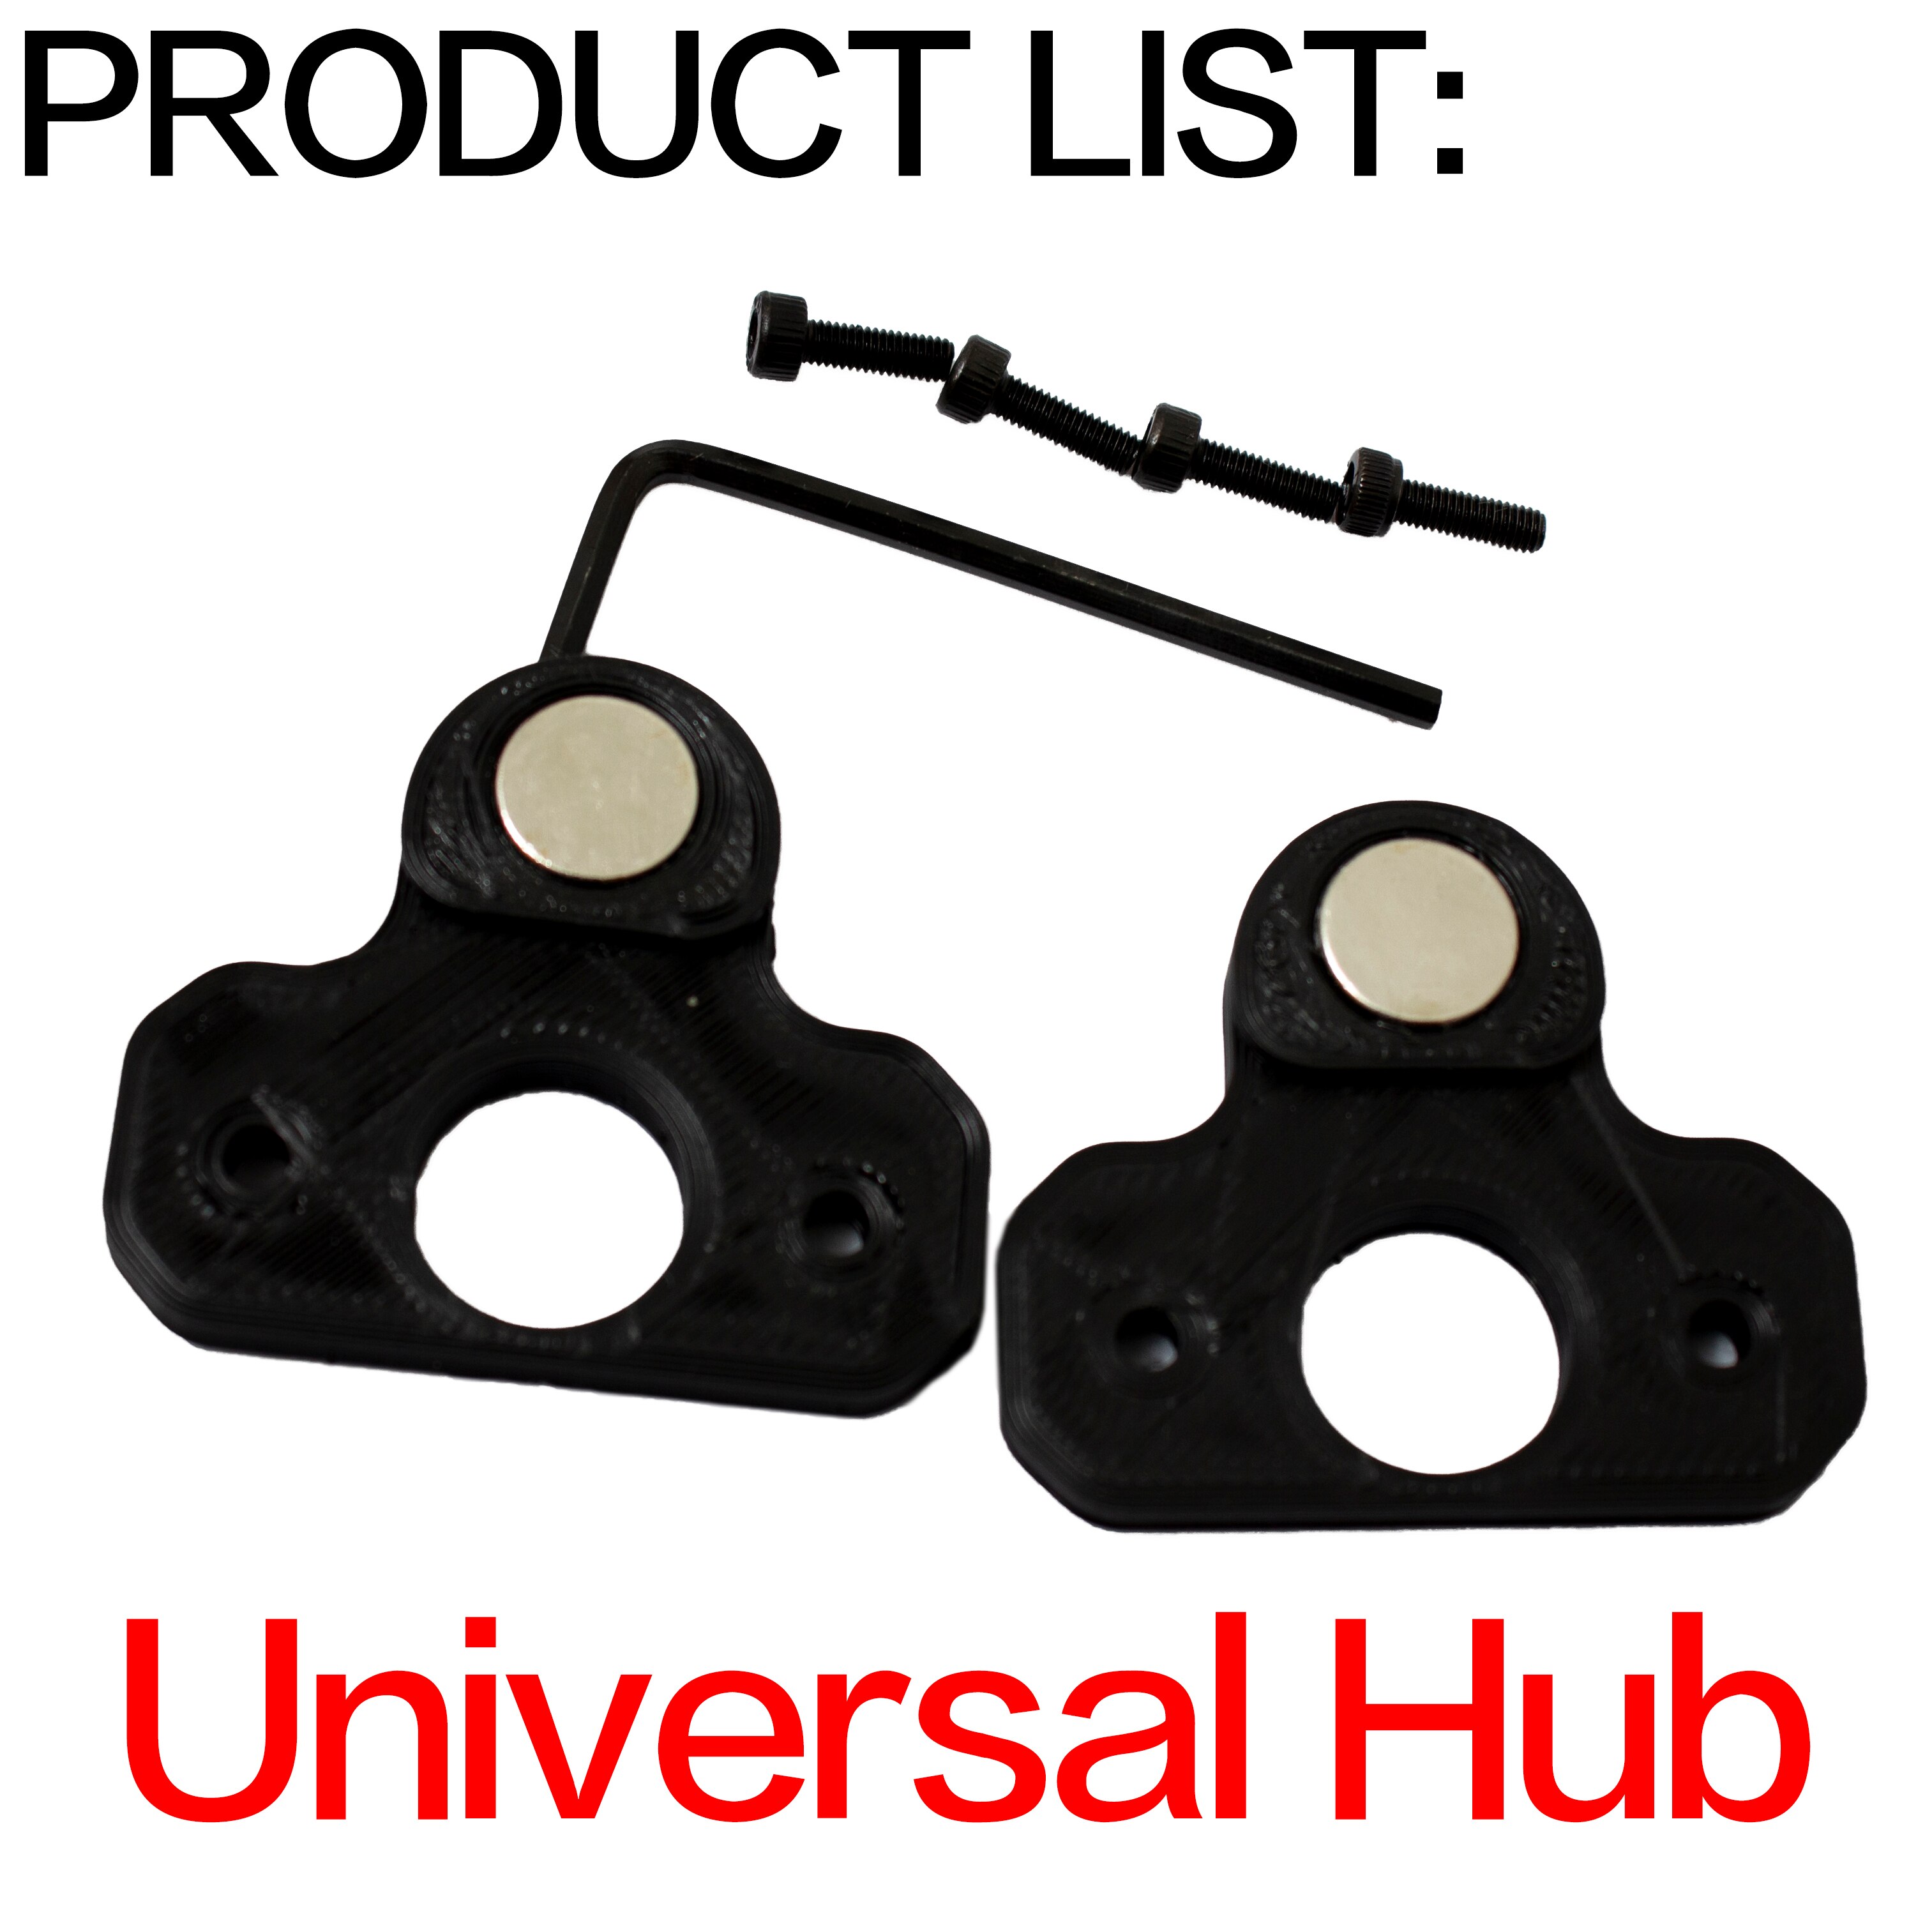 Fanatec universal hub 918 rsr formula one magnetskifter mod: Universalnav